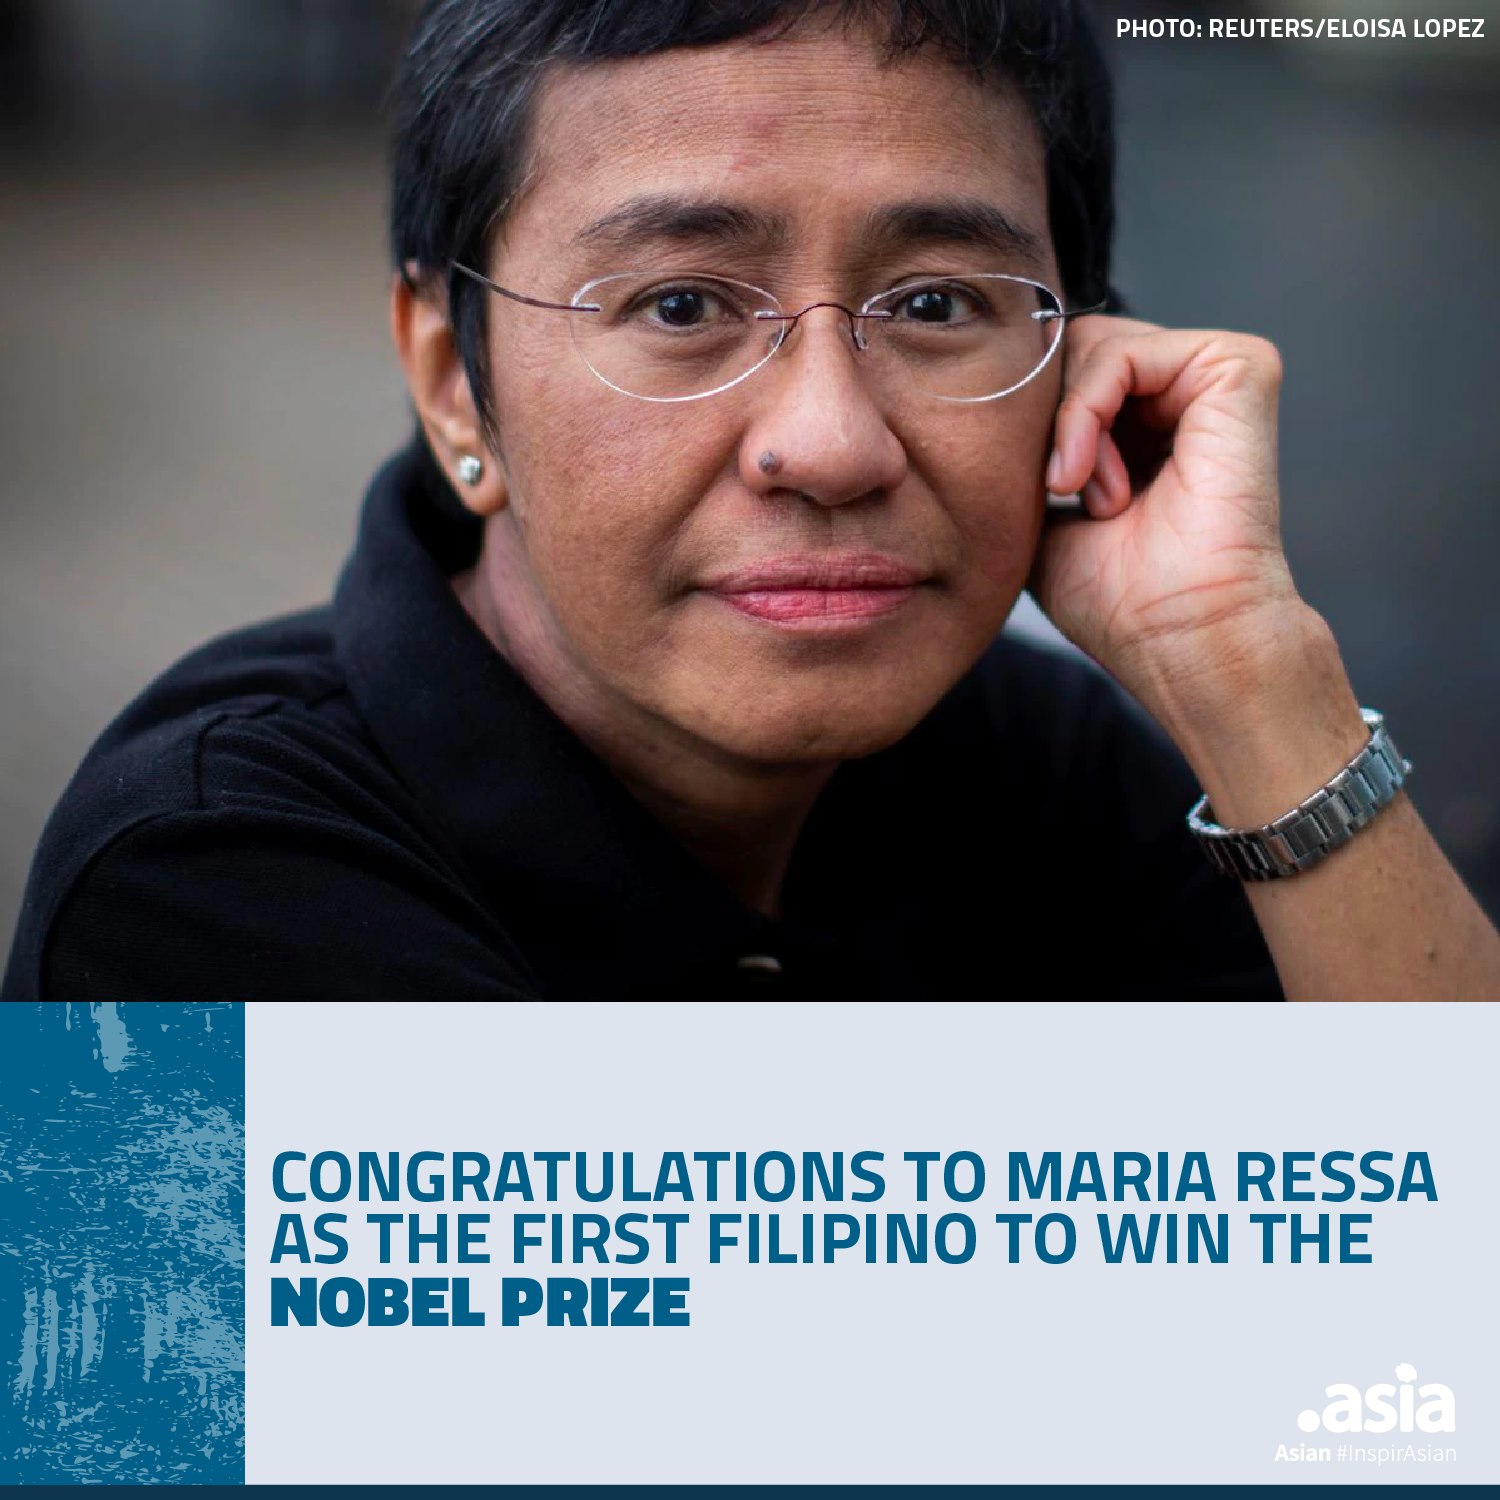 Image: Maria Ressa, Nobel Prize winner